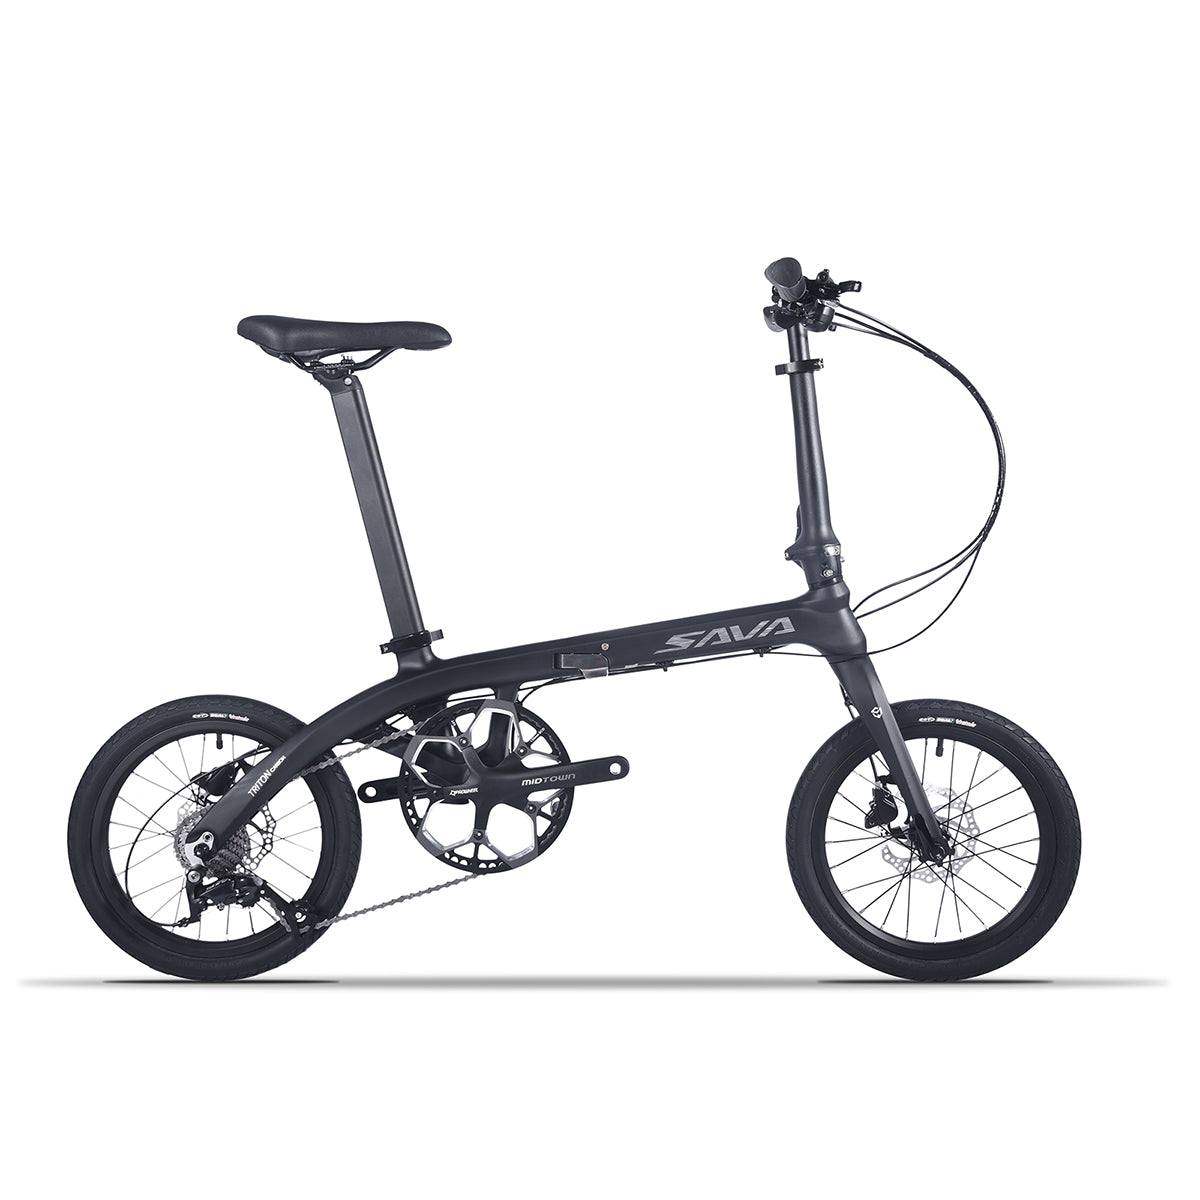 Products – SAVA Carbon Bike